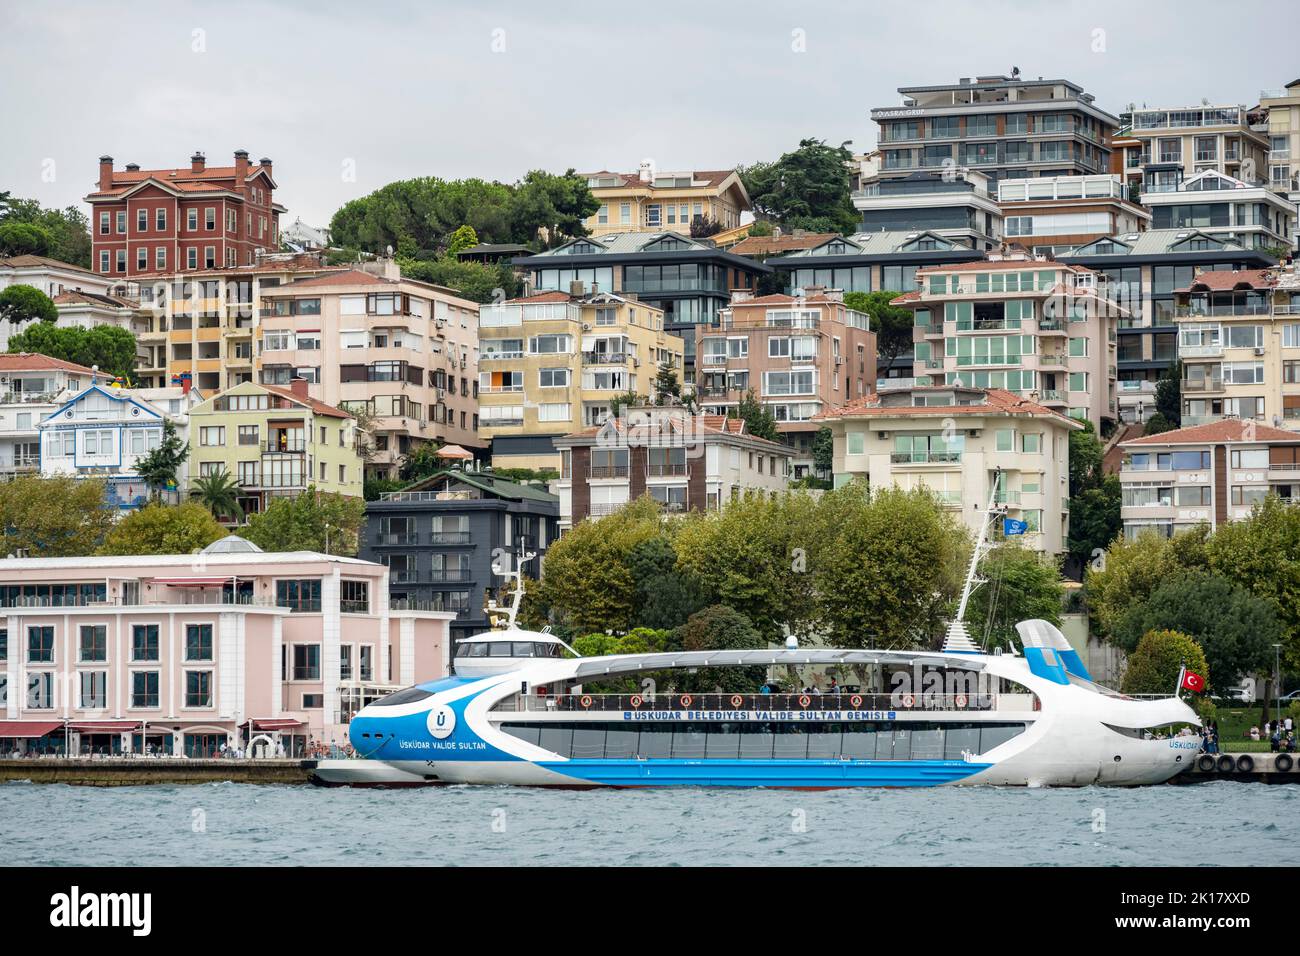 Türkei, Istanbul, Üsküdar, modernes Fährschiff Foto Stock